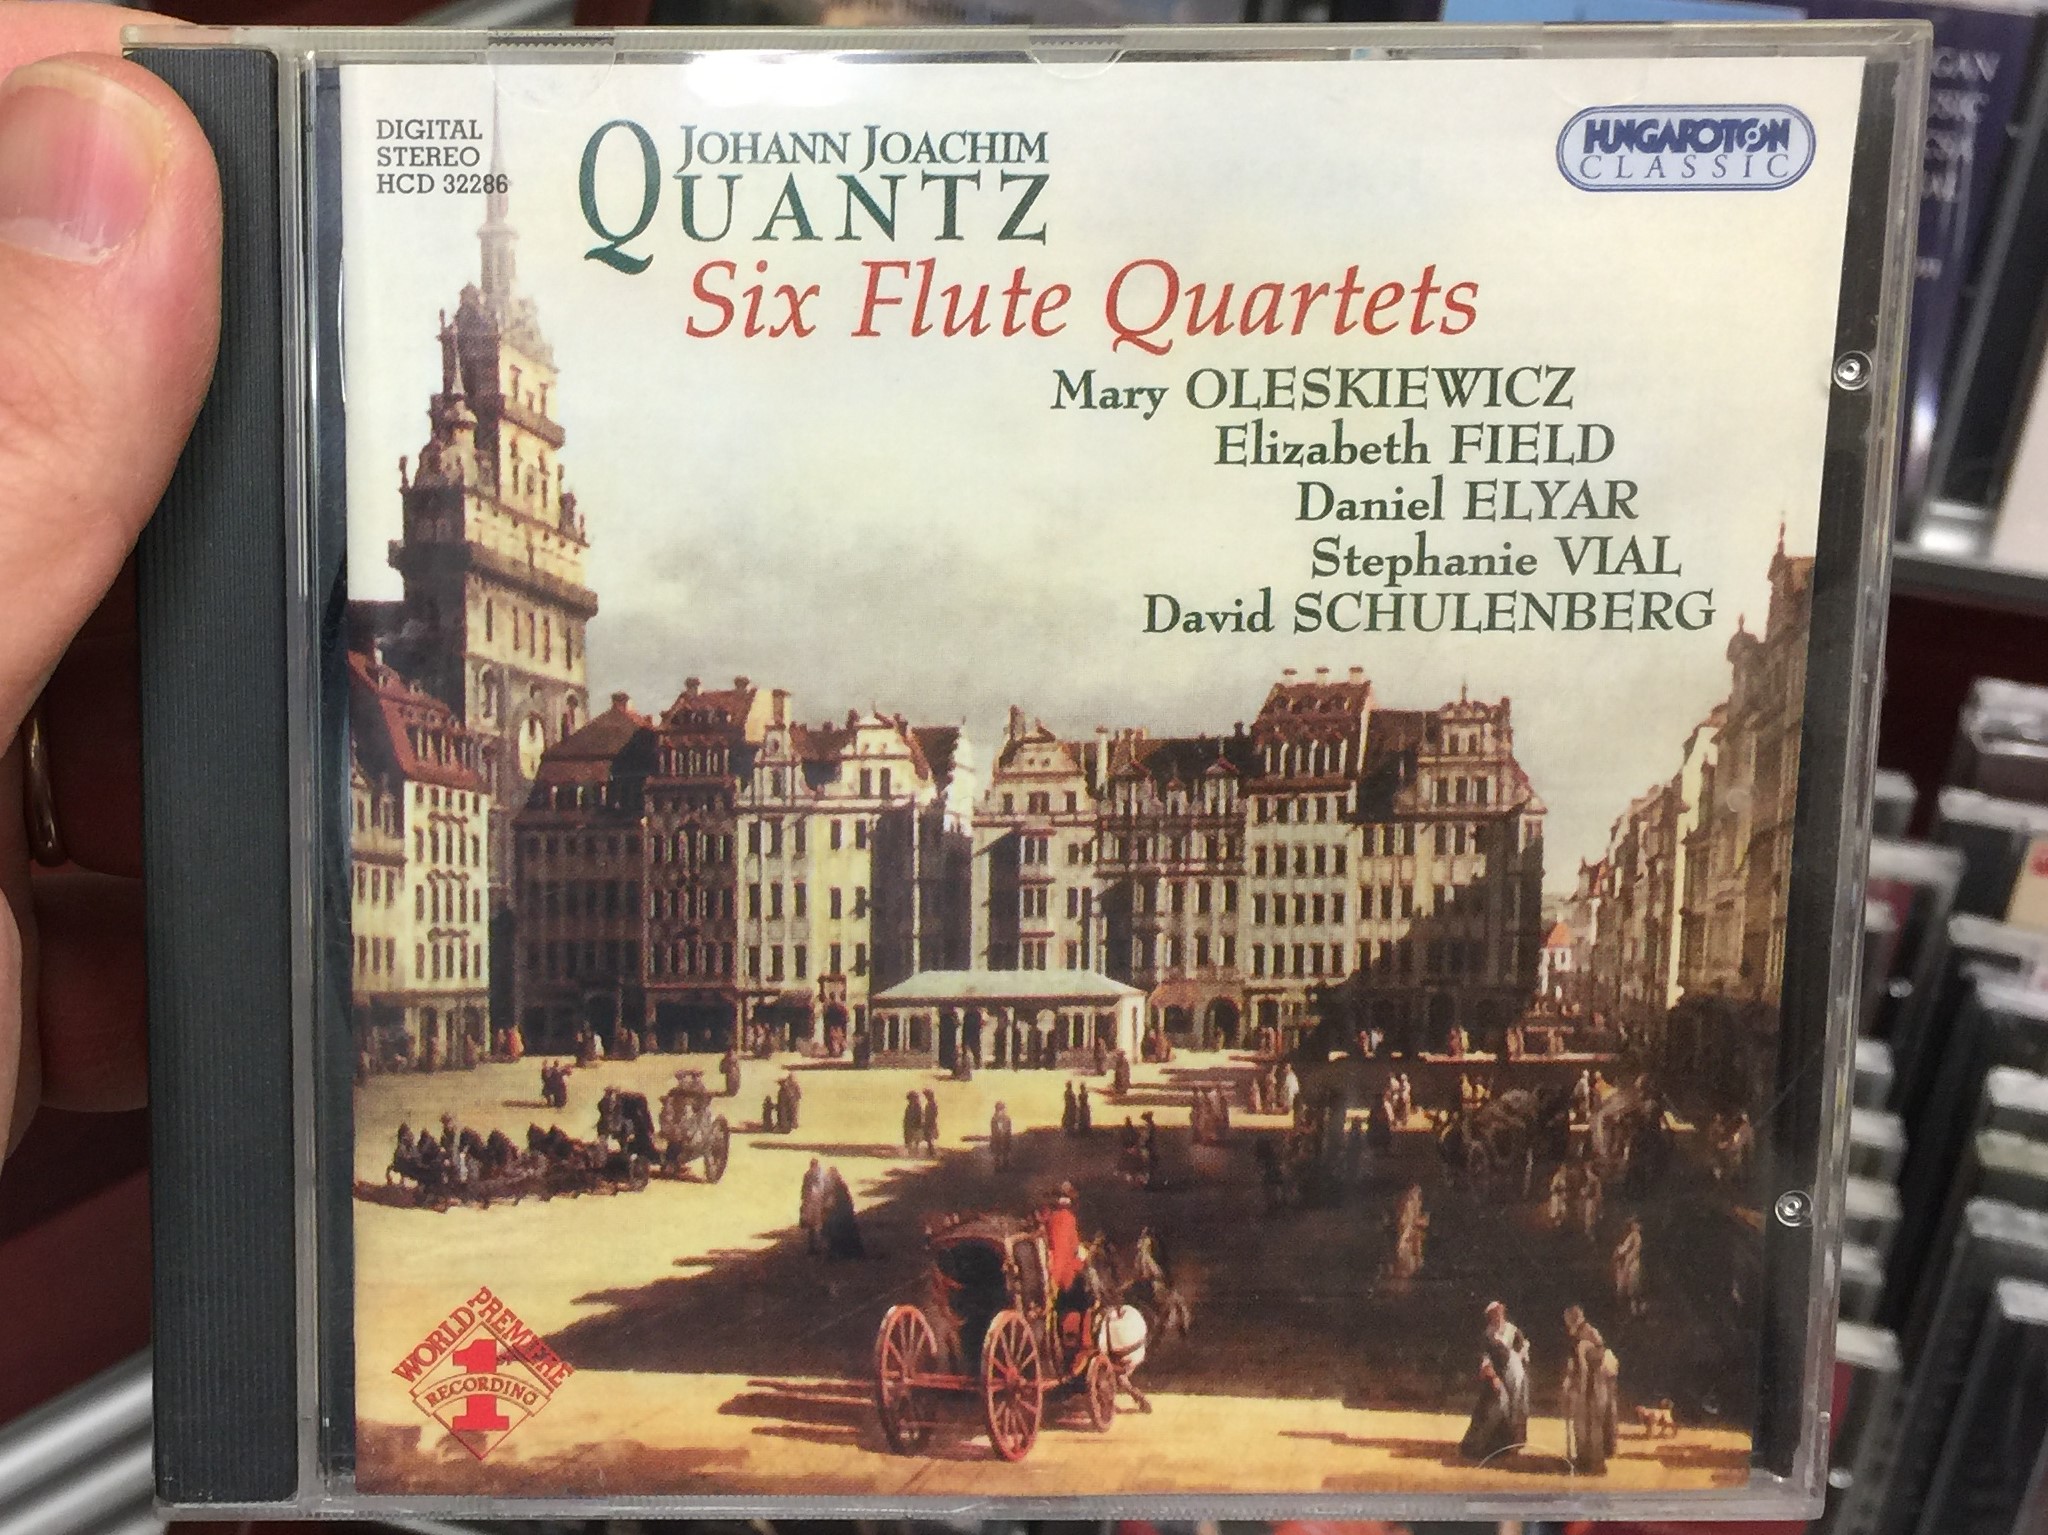 johann-joachim-quantz-six-flute-quartets-mary-oleskiewicz.-elizabeth-field-daniel-elyar-stephanie-vial-david-schulenberg-hungaroton-classic-audio-cd-2004-stereo-hcd-32286-1-.jpg